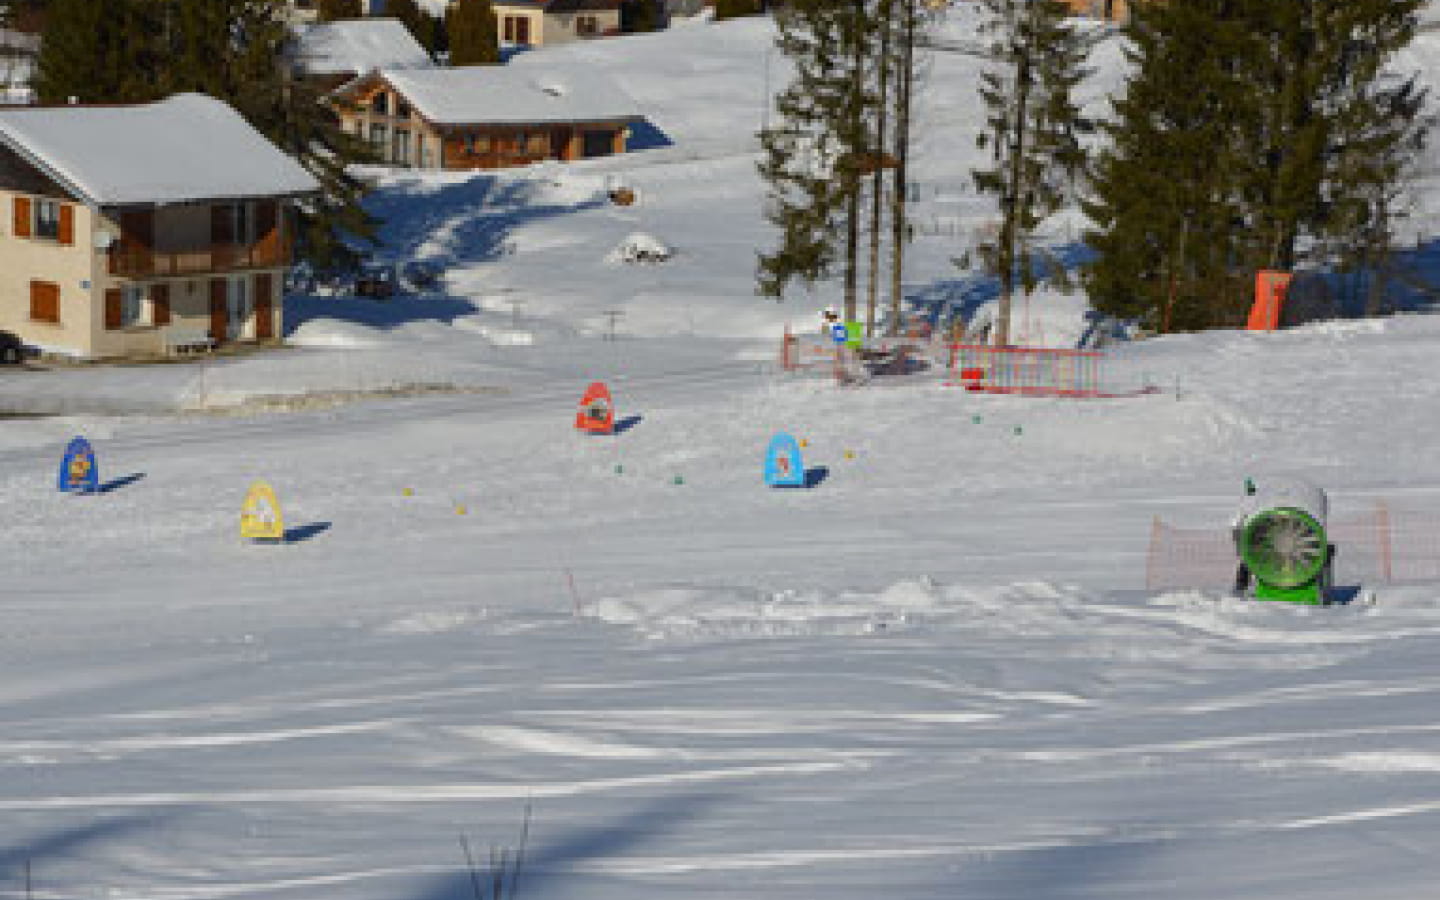 Station de ski alpin - Chaux-Neuve